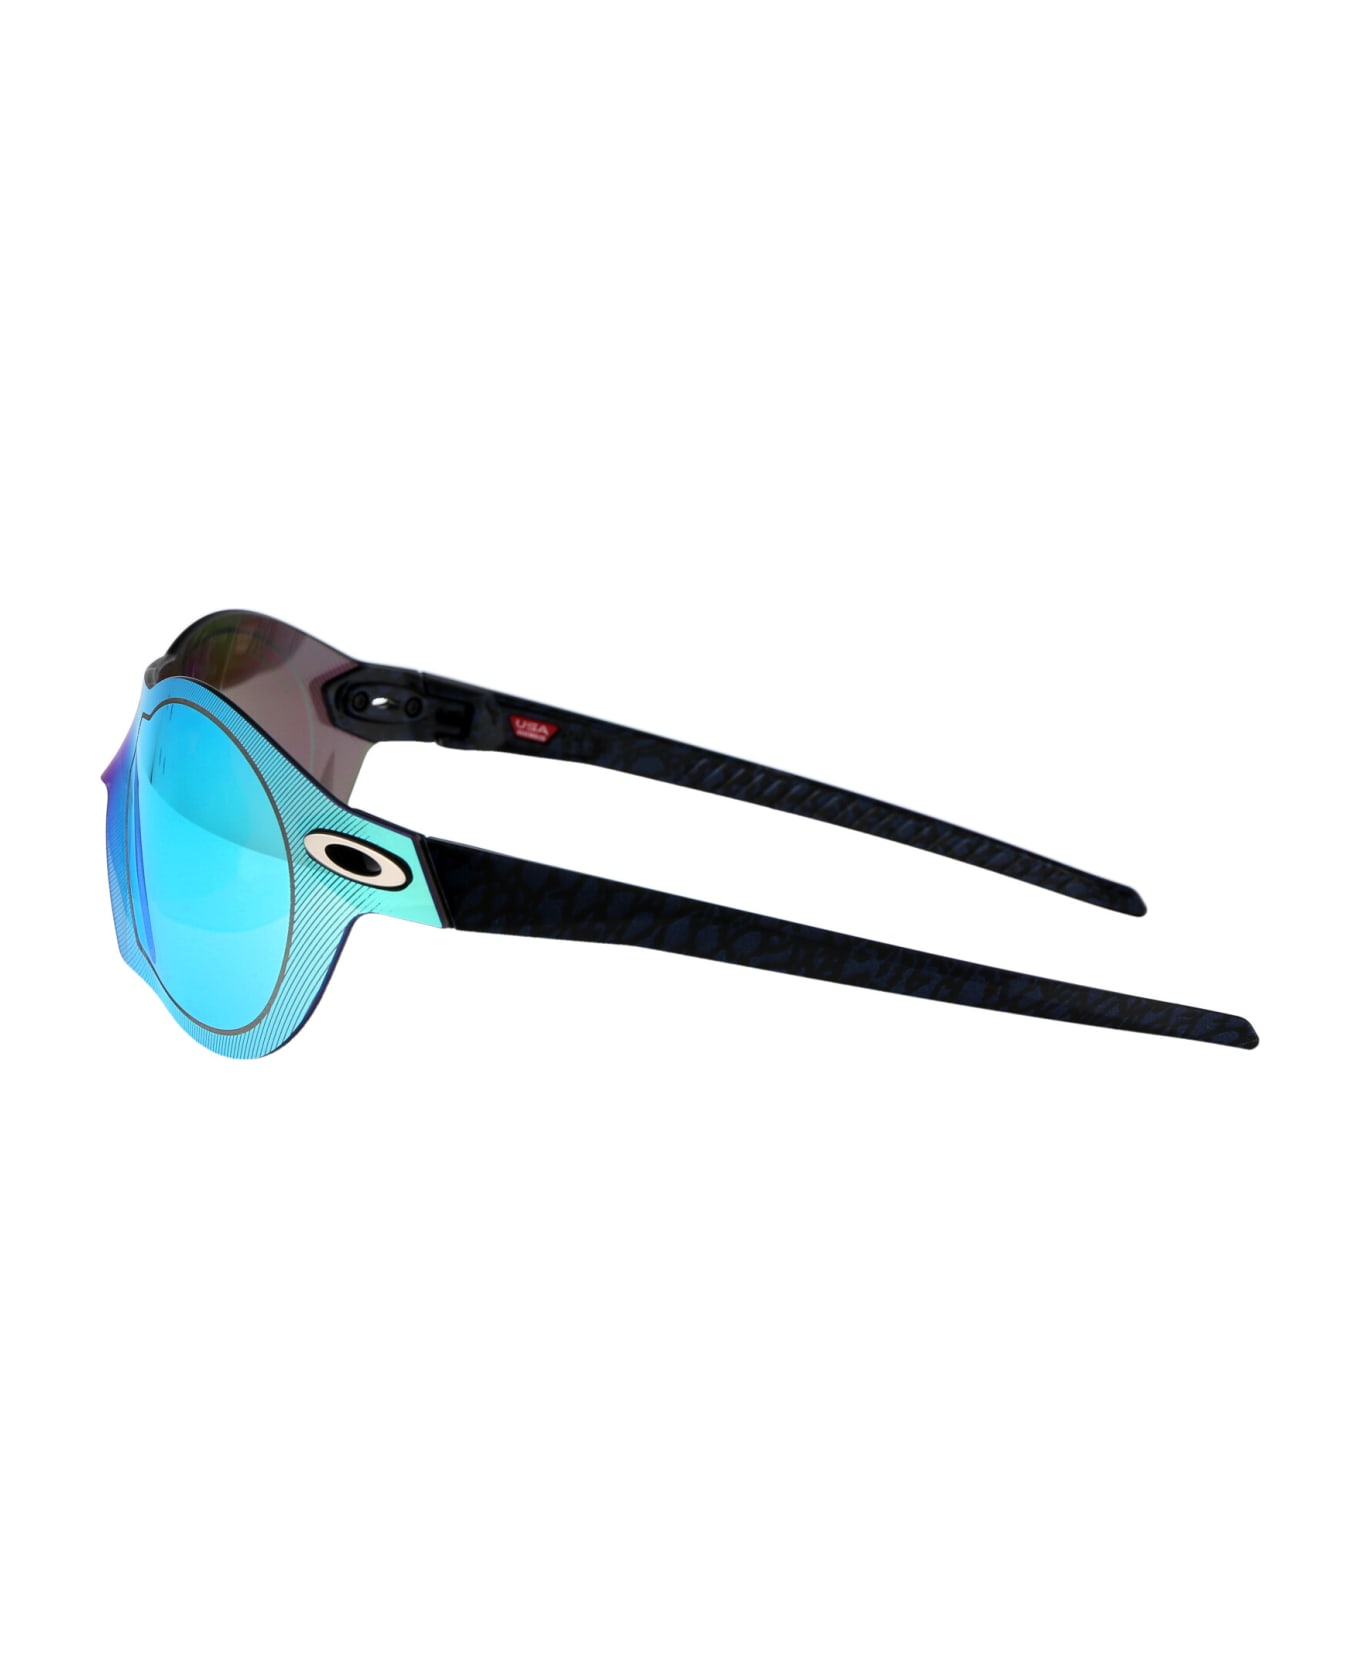 Oakley Re:subzero Sunglasses サングラス